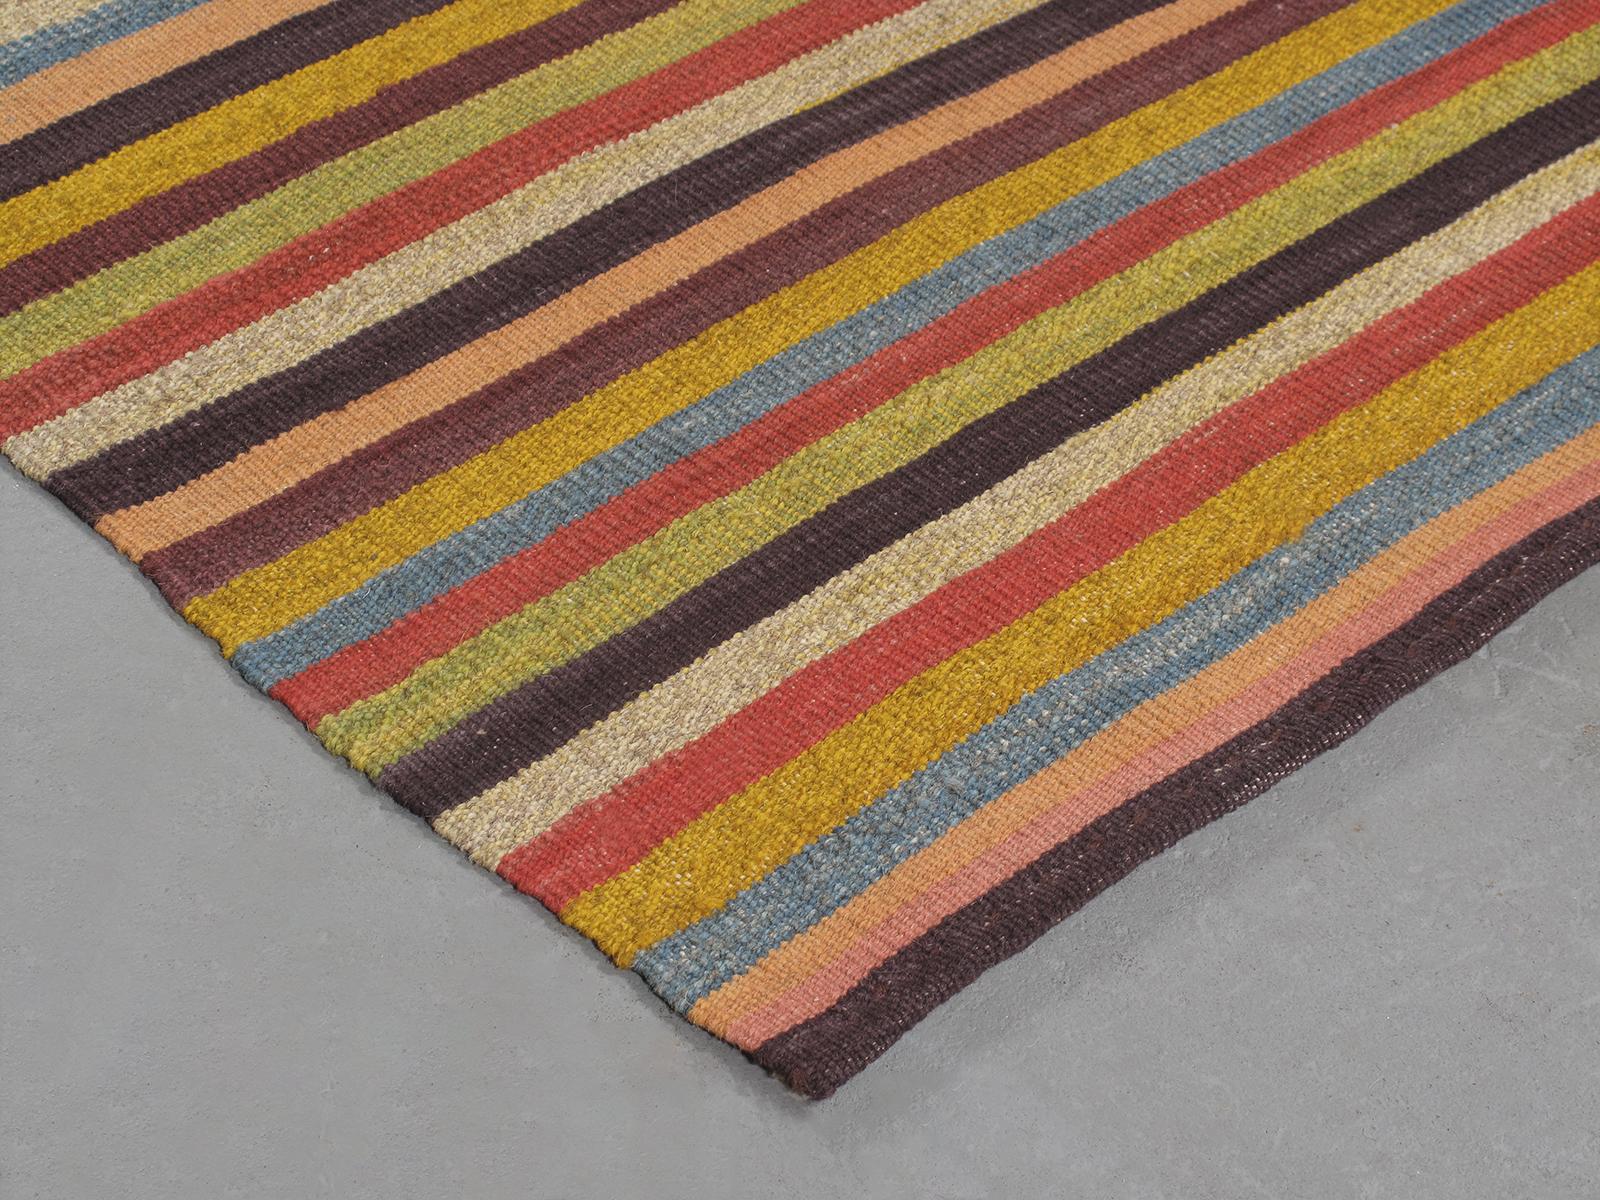 Kilim Modern Mazandaran Style Handwoven Flatweave Stripe Rug in Multi-Color